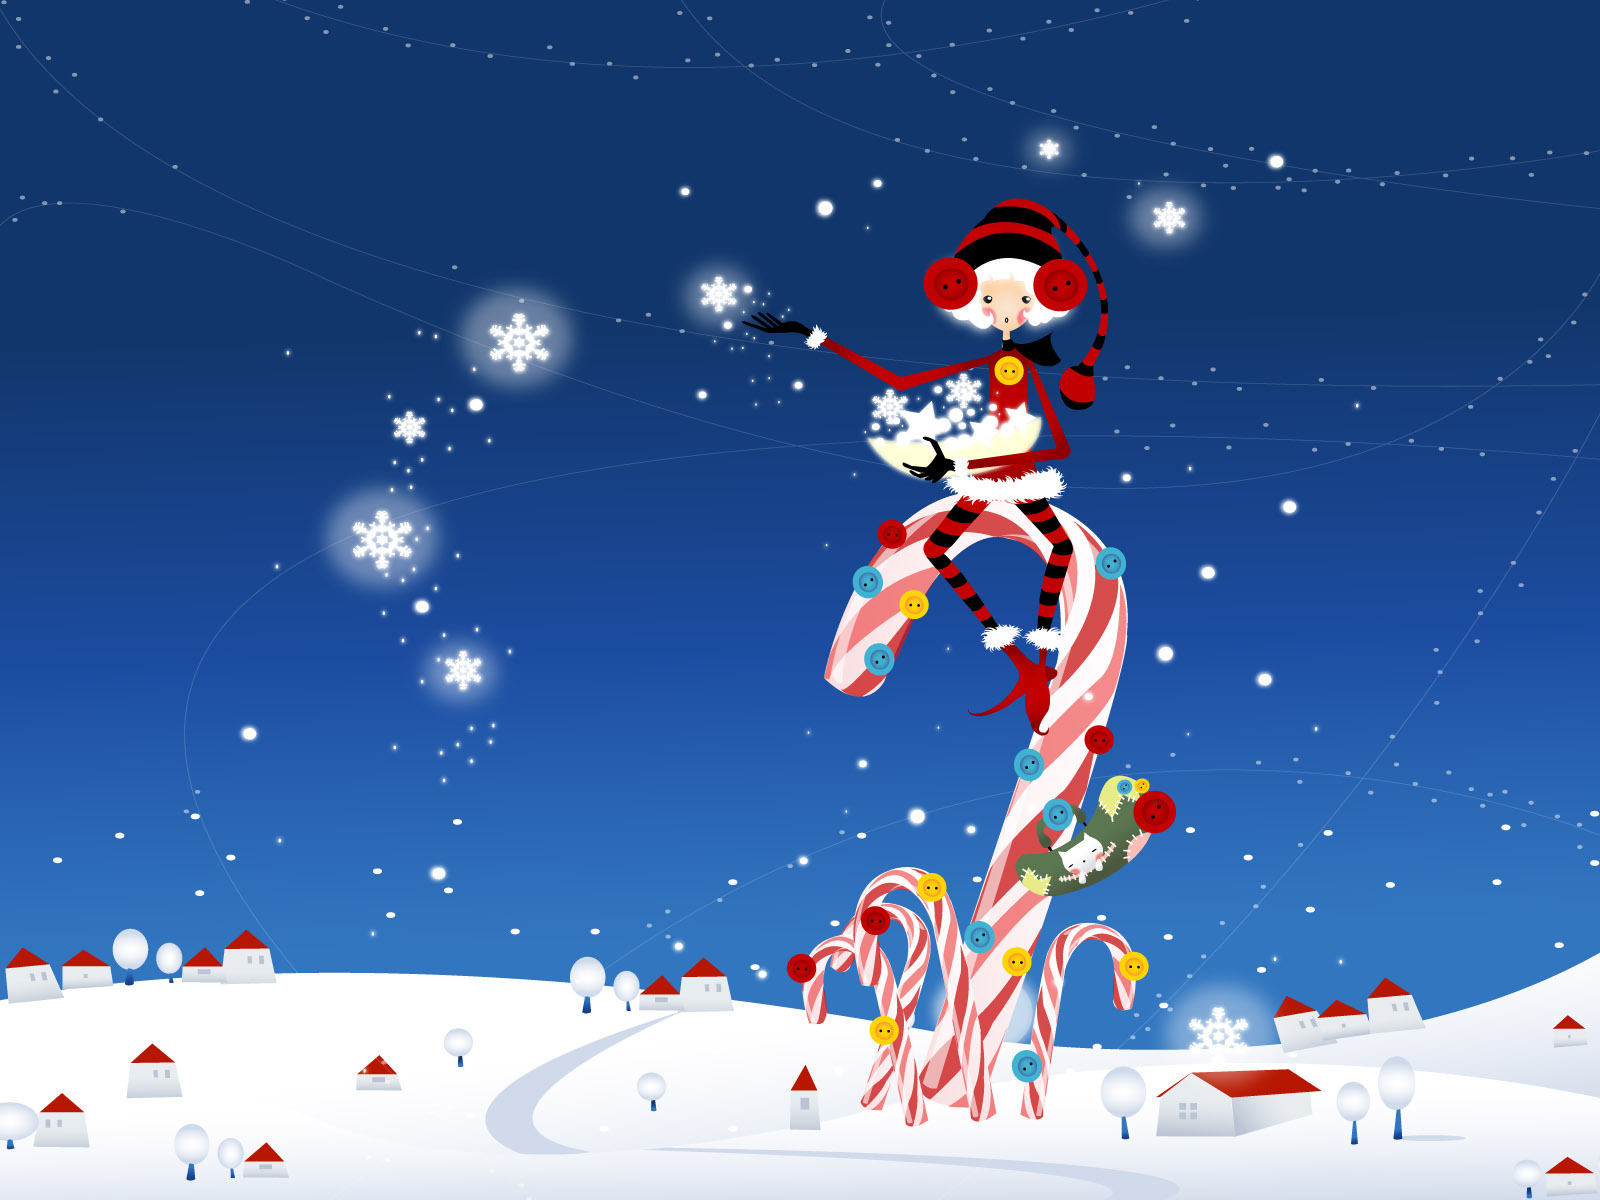 Free Animated Christmas Wallpaper for Desktop (2)